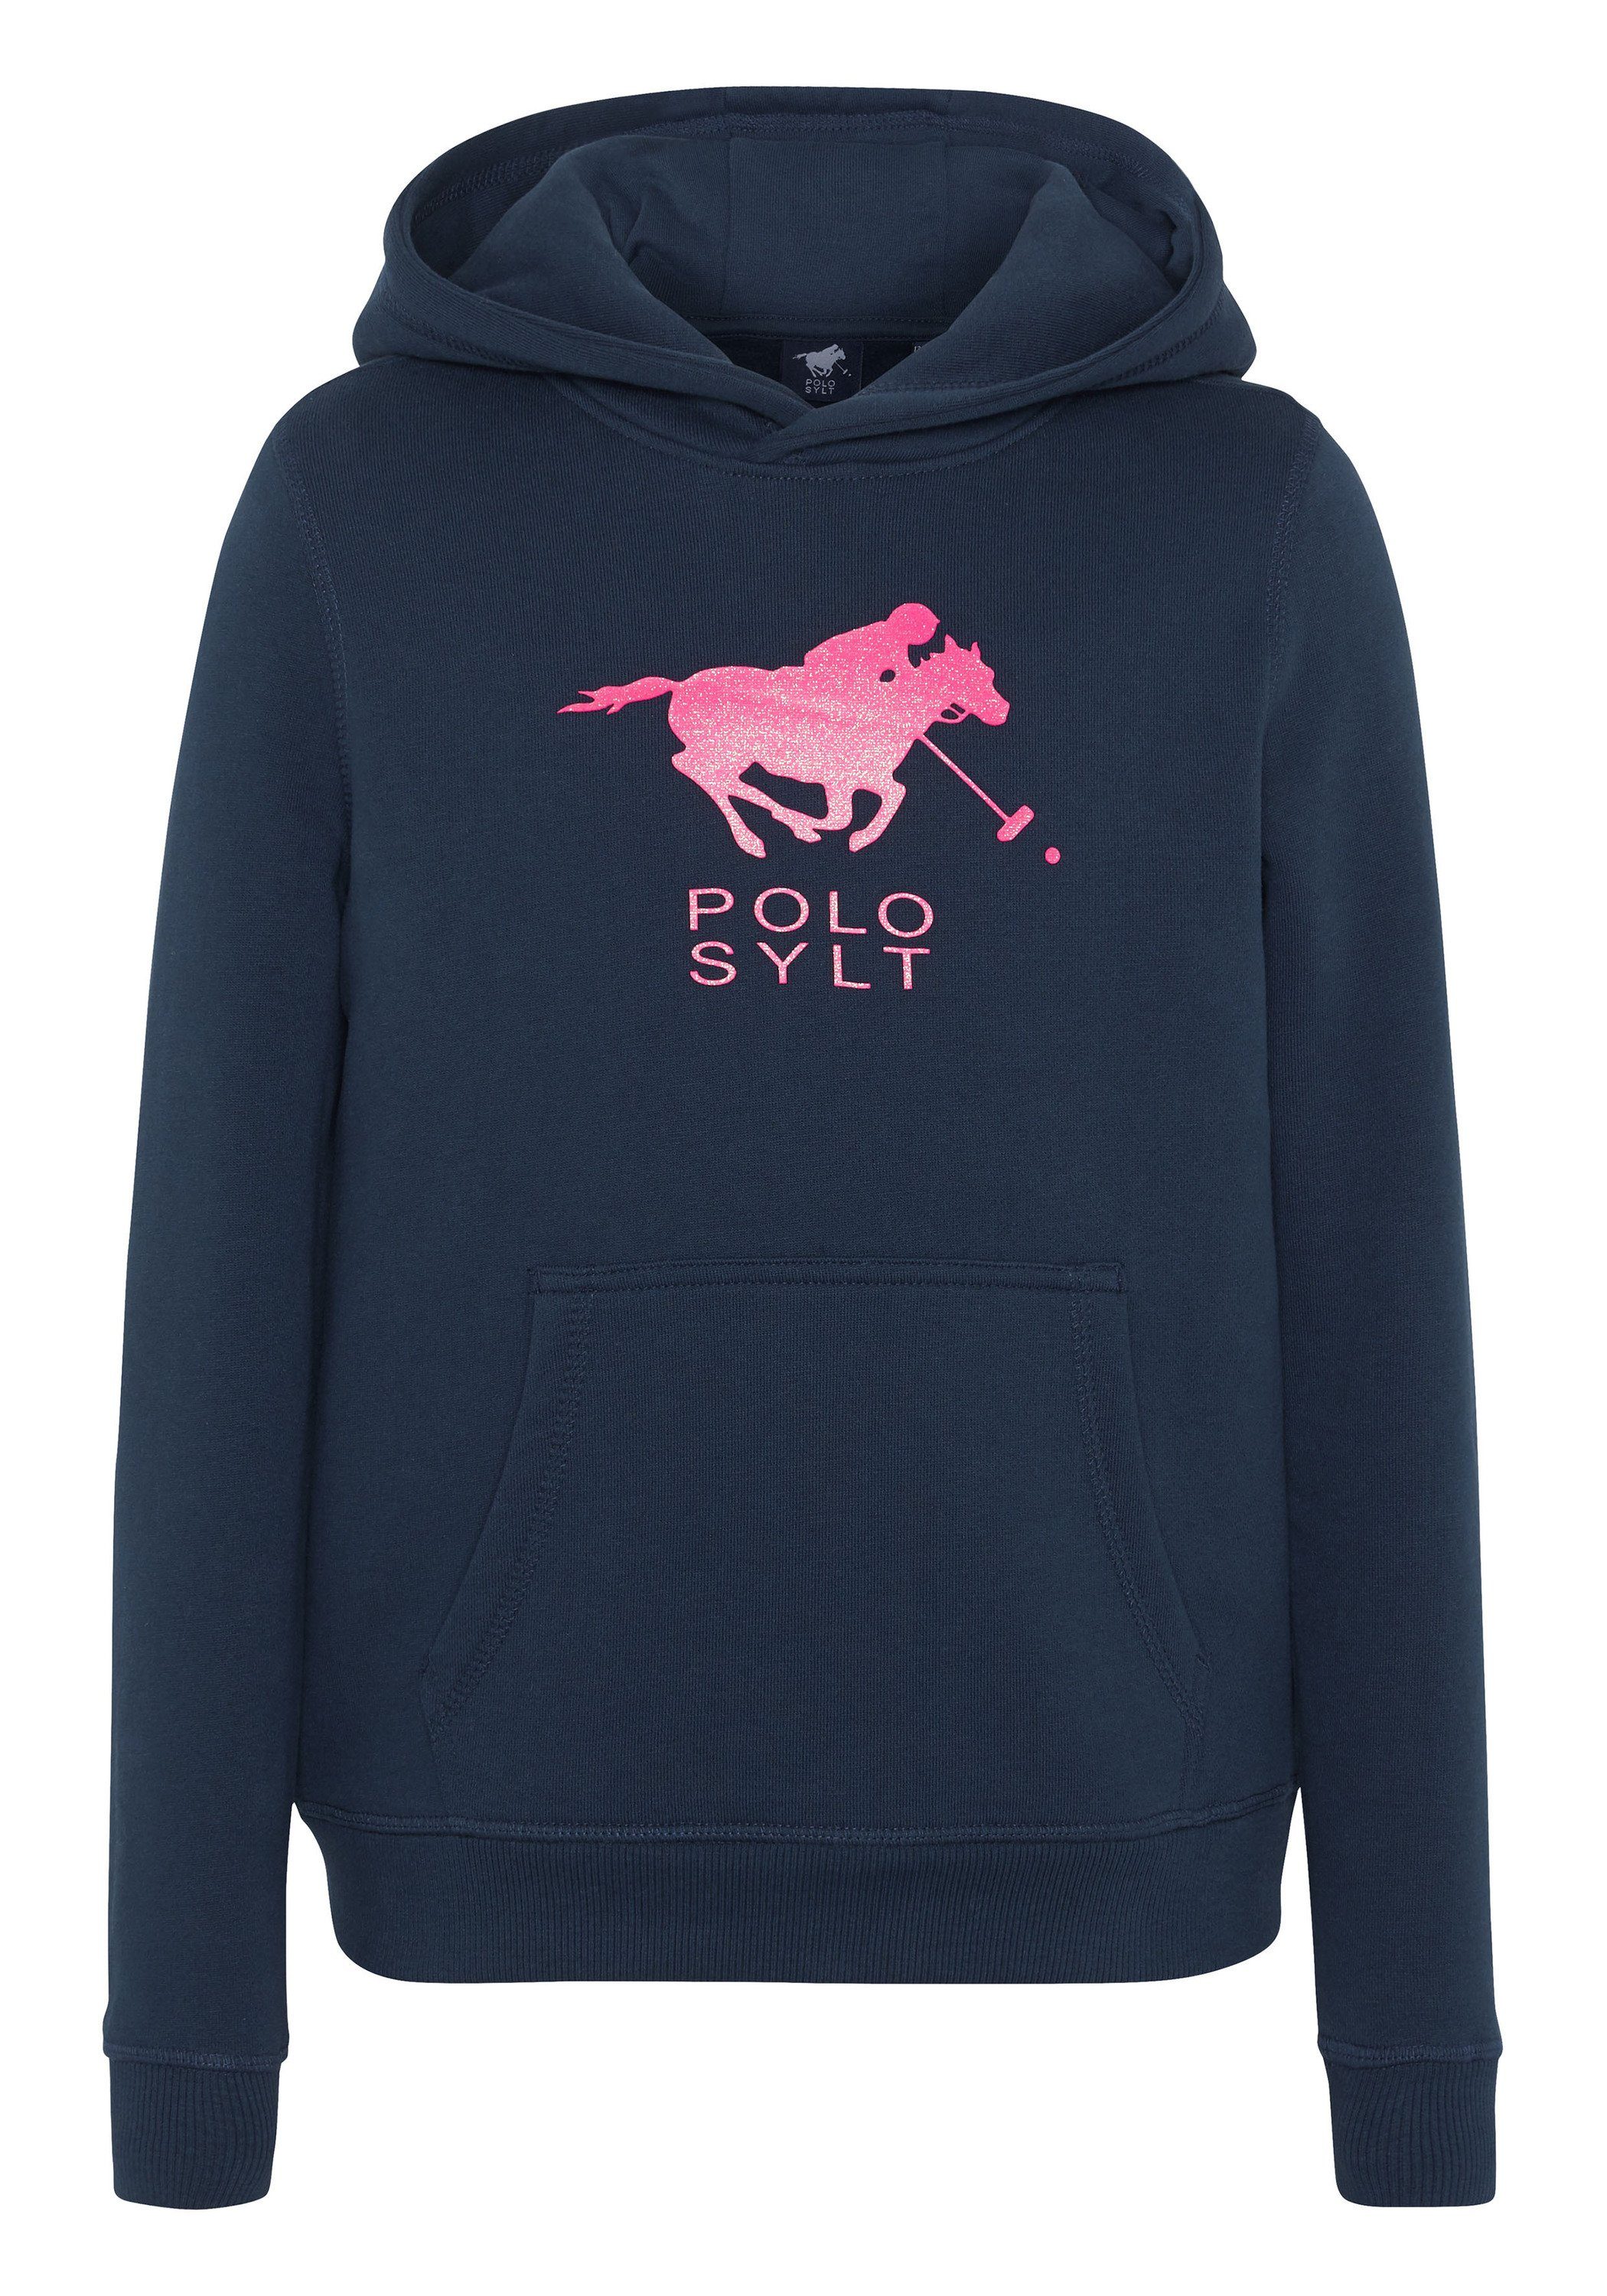 Polo Sylt Sweatshirt mit Eclipse Label-Motiv Total glitzerndem